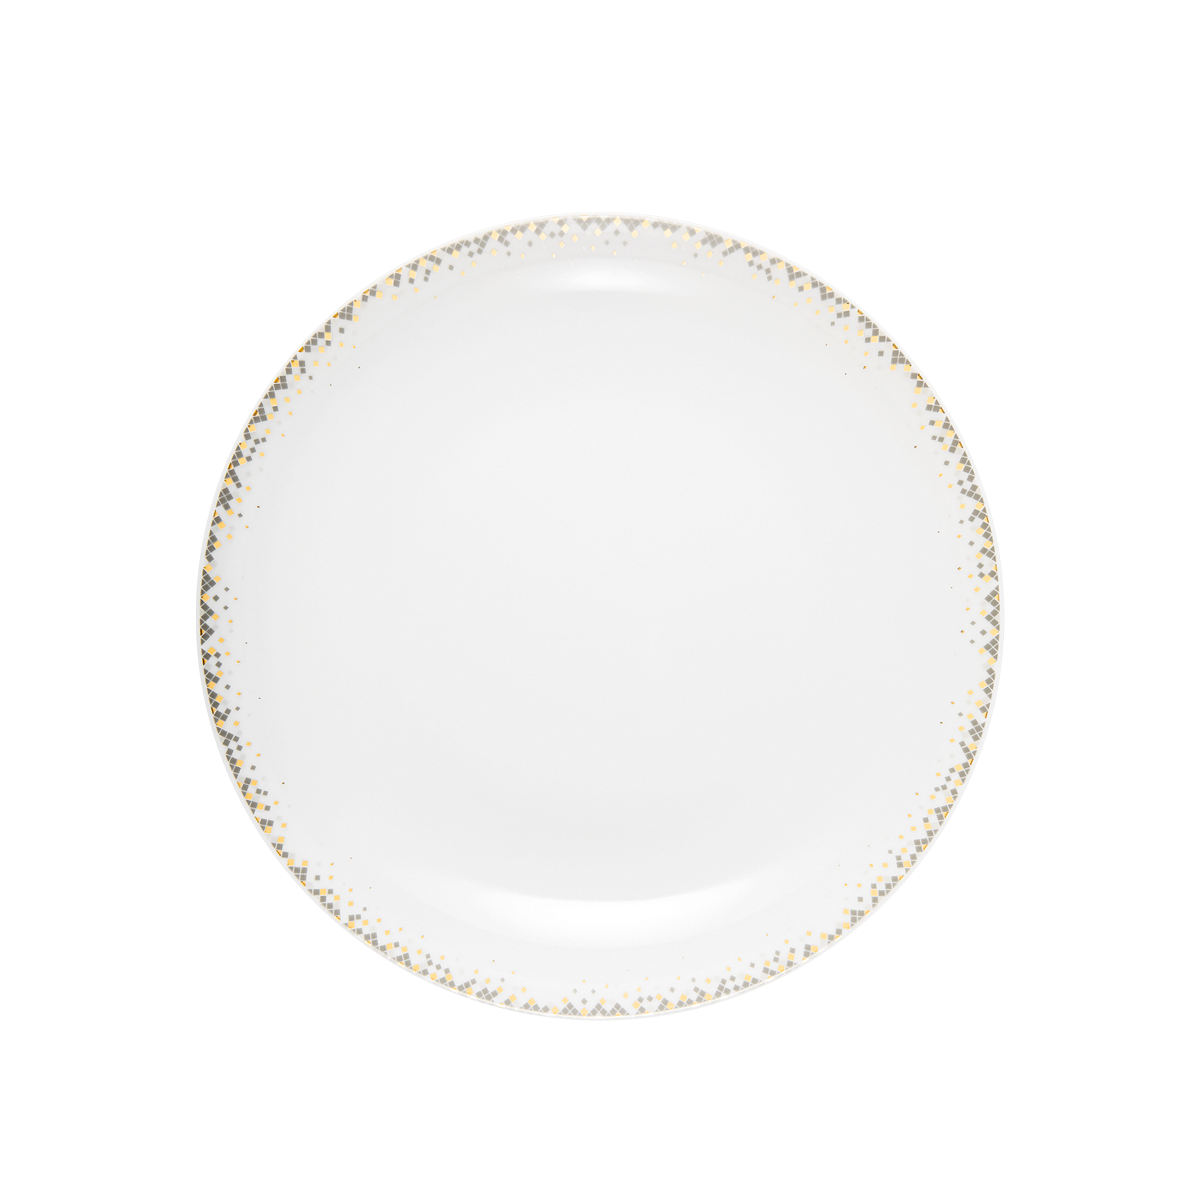 Тарелки картинка для детей на прозрачном фоне. 3024df06c1111 тарелка суповая Picardie Amber 23см. Белая тарелка. Тарелка на прозрачном фоне. Тарелка белая круглая.